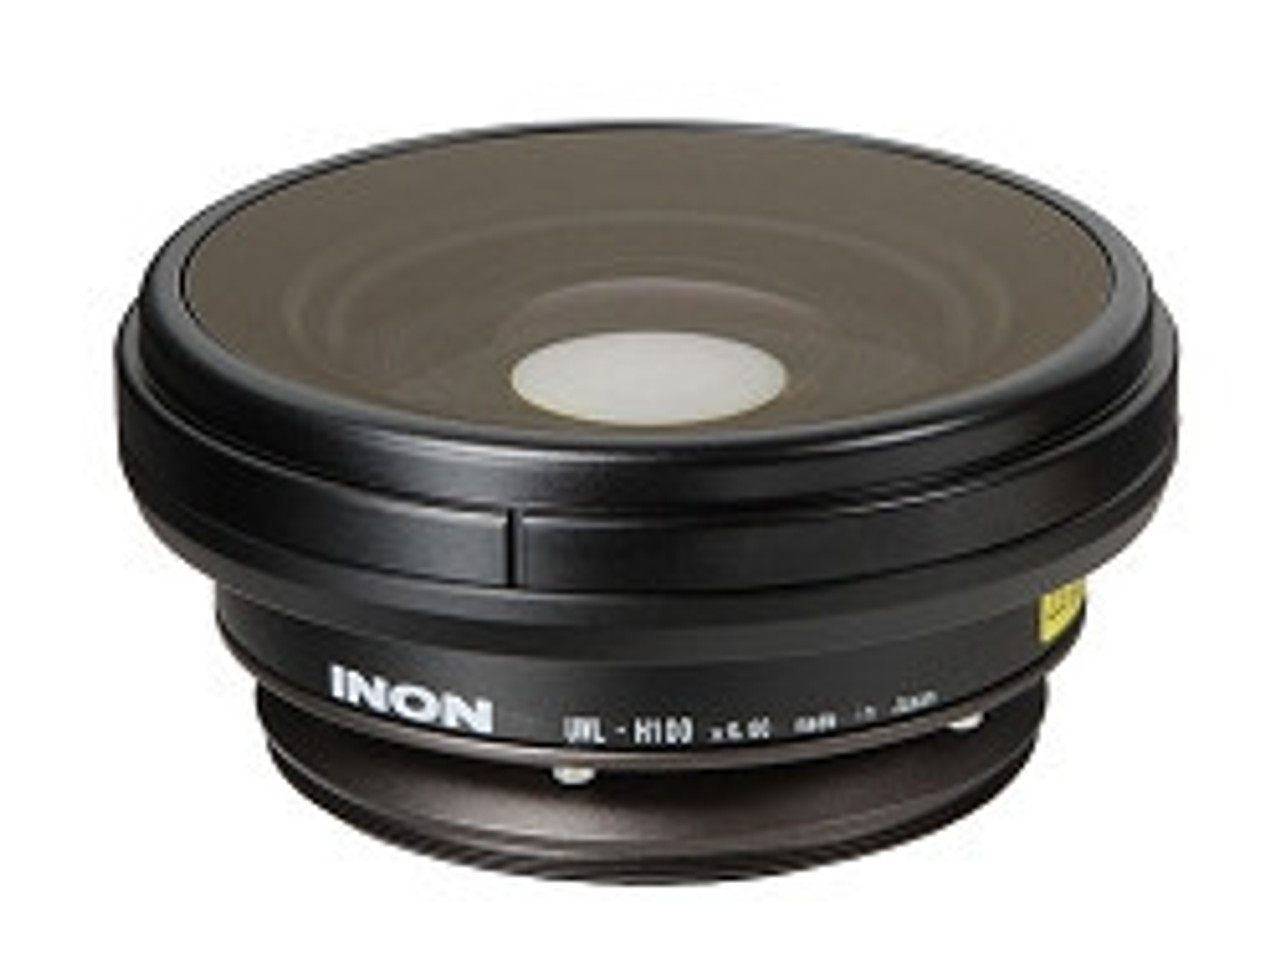 Inon UWL-H100 28M67 Wide-angle lens type 2